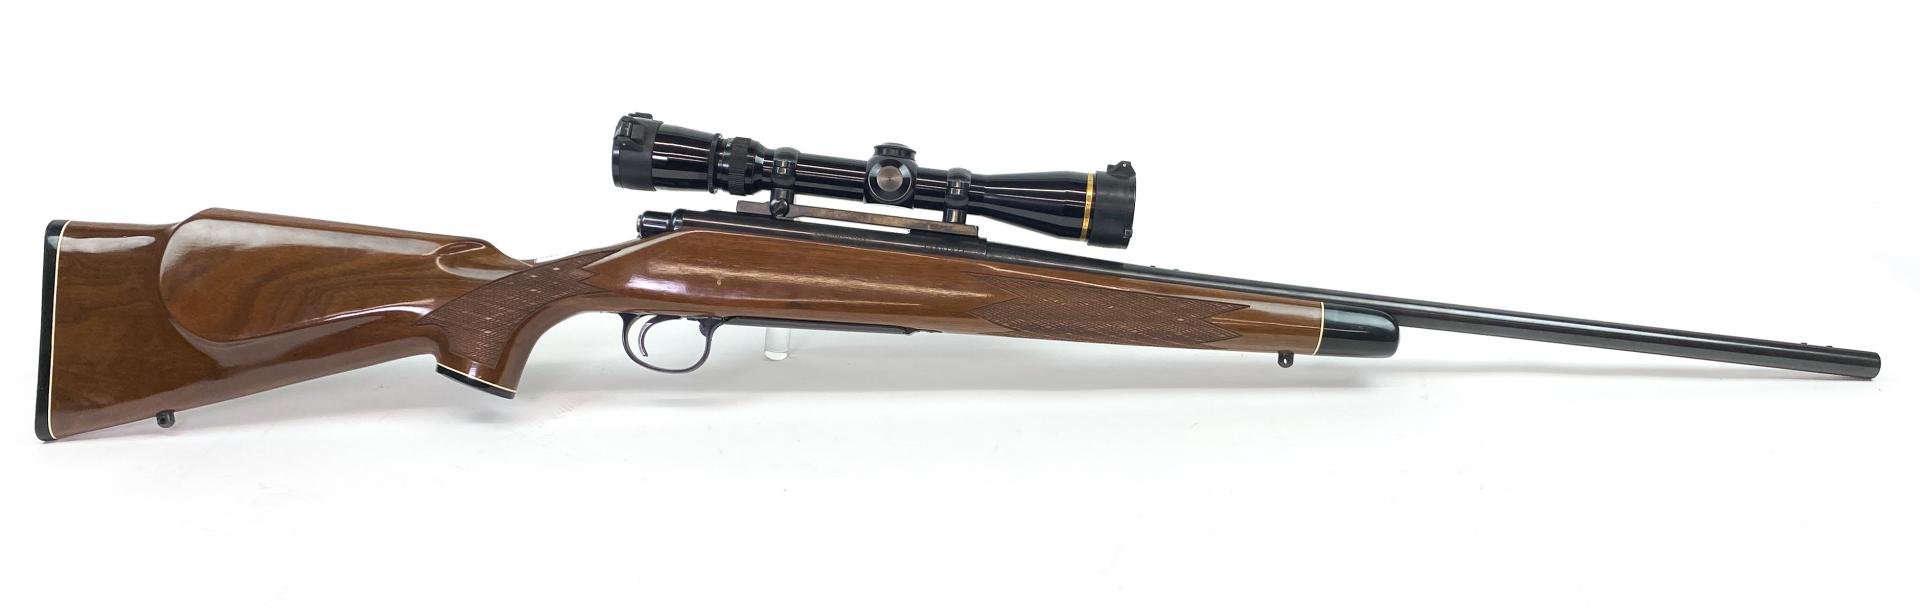 custom remington 700